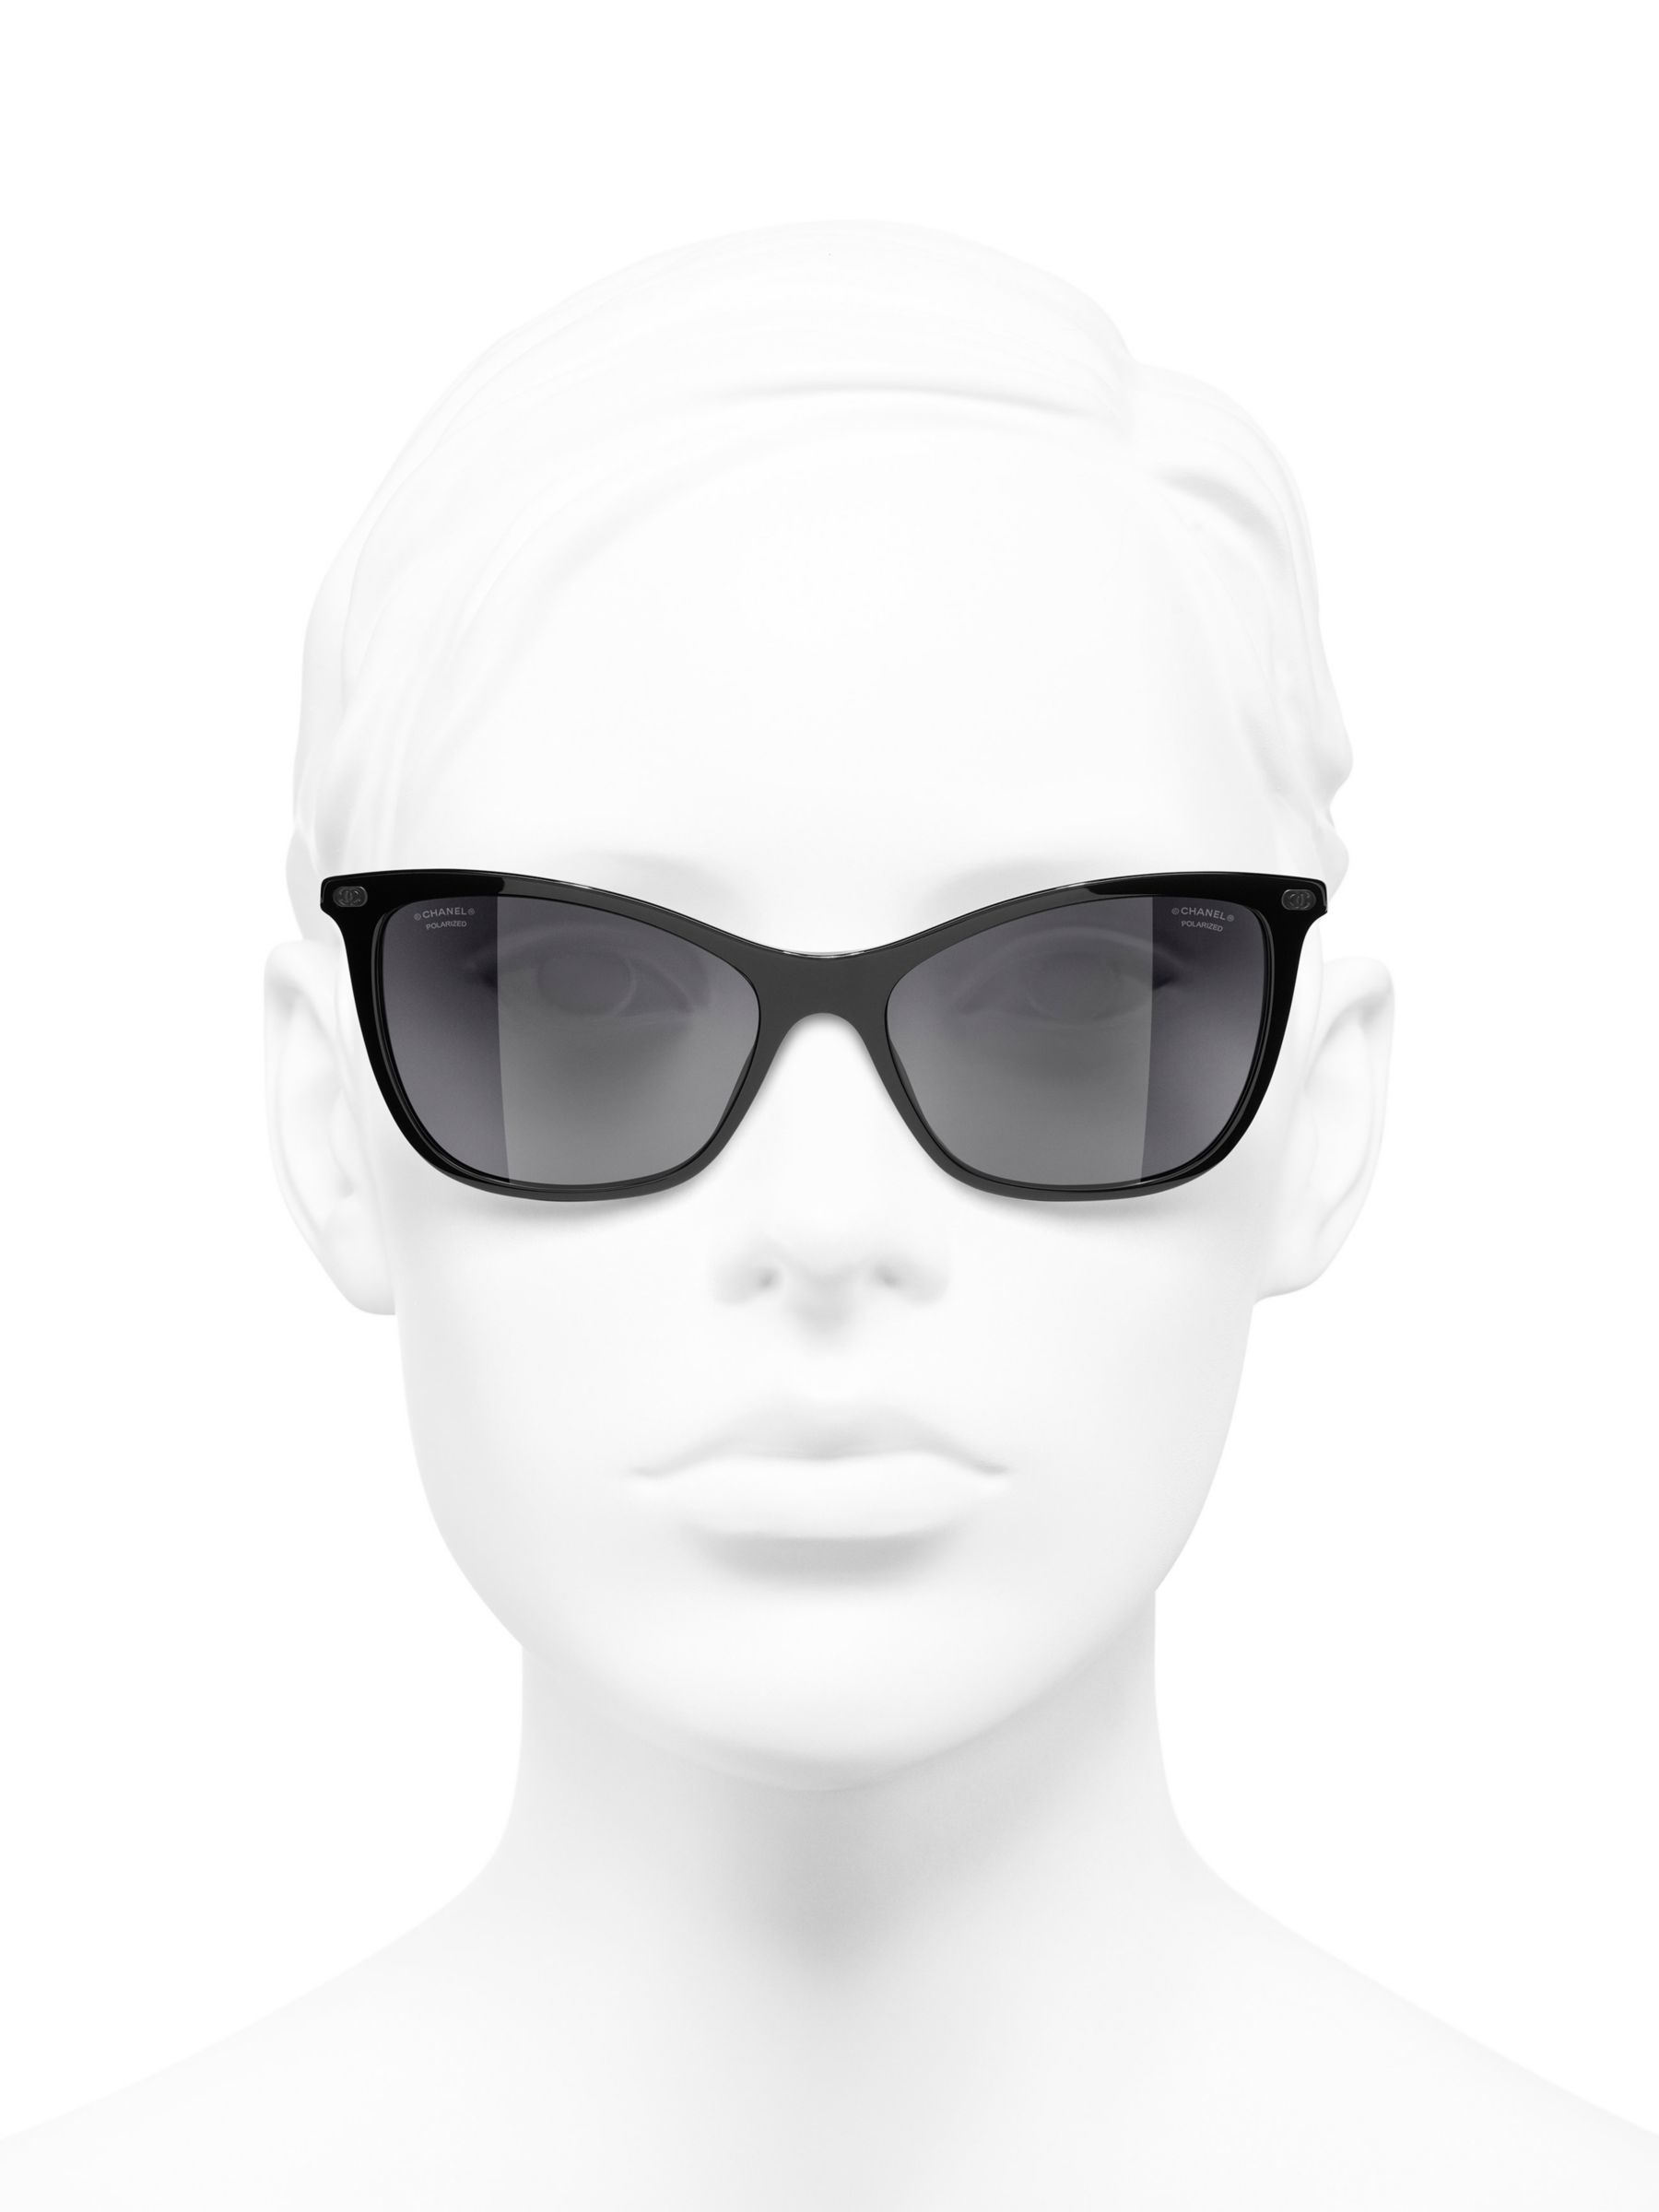 CHANEL Cat Eye Sunglasses for Women for sale